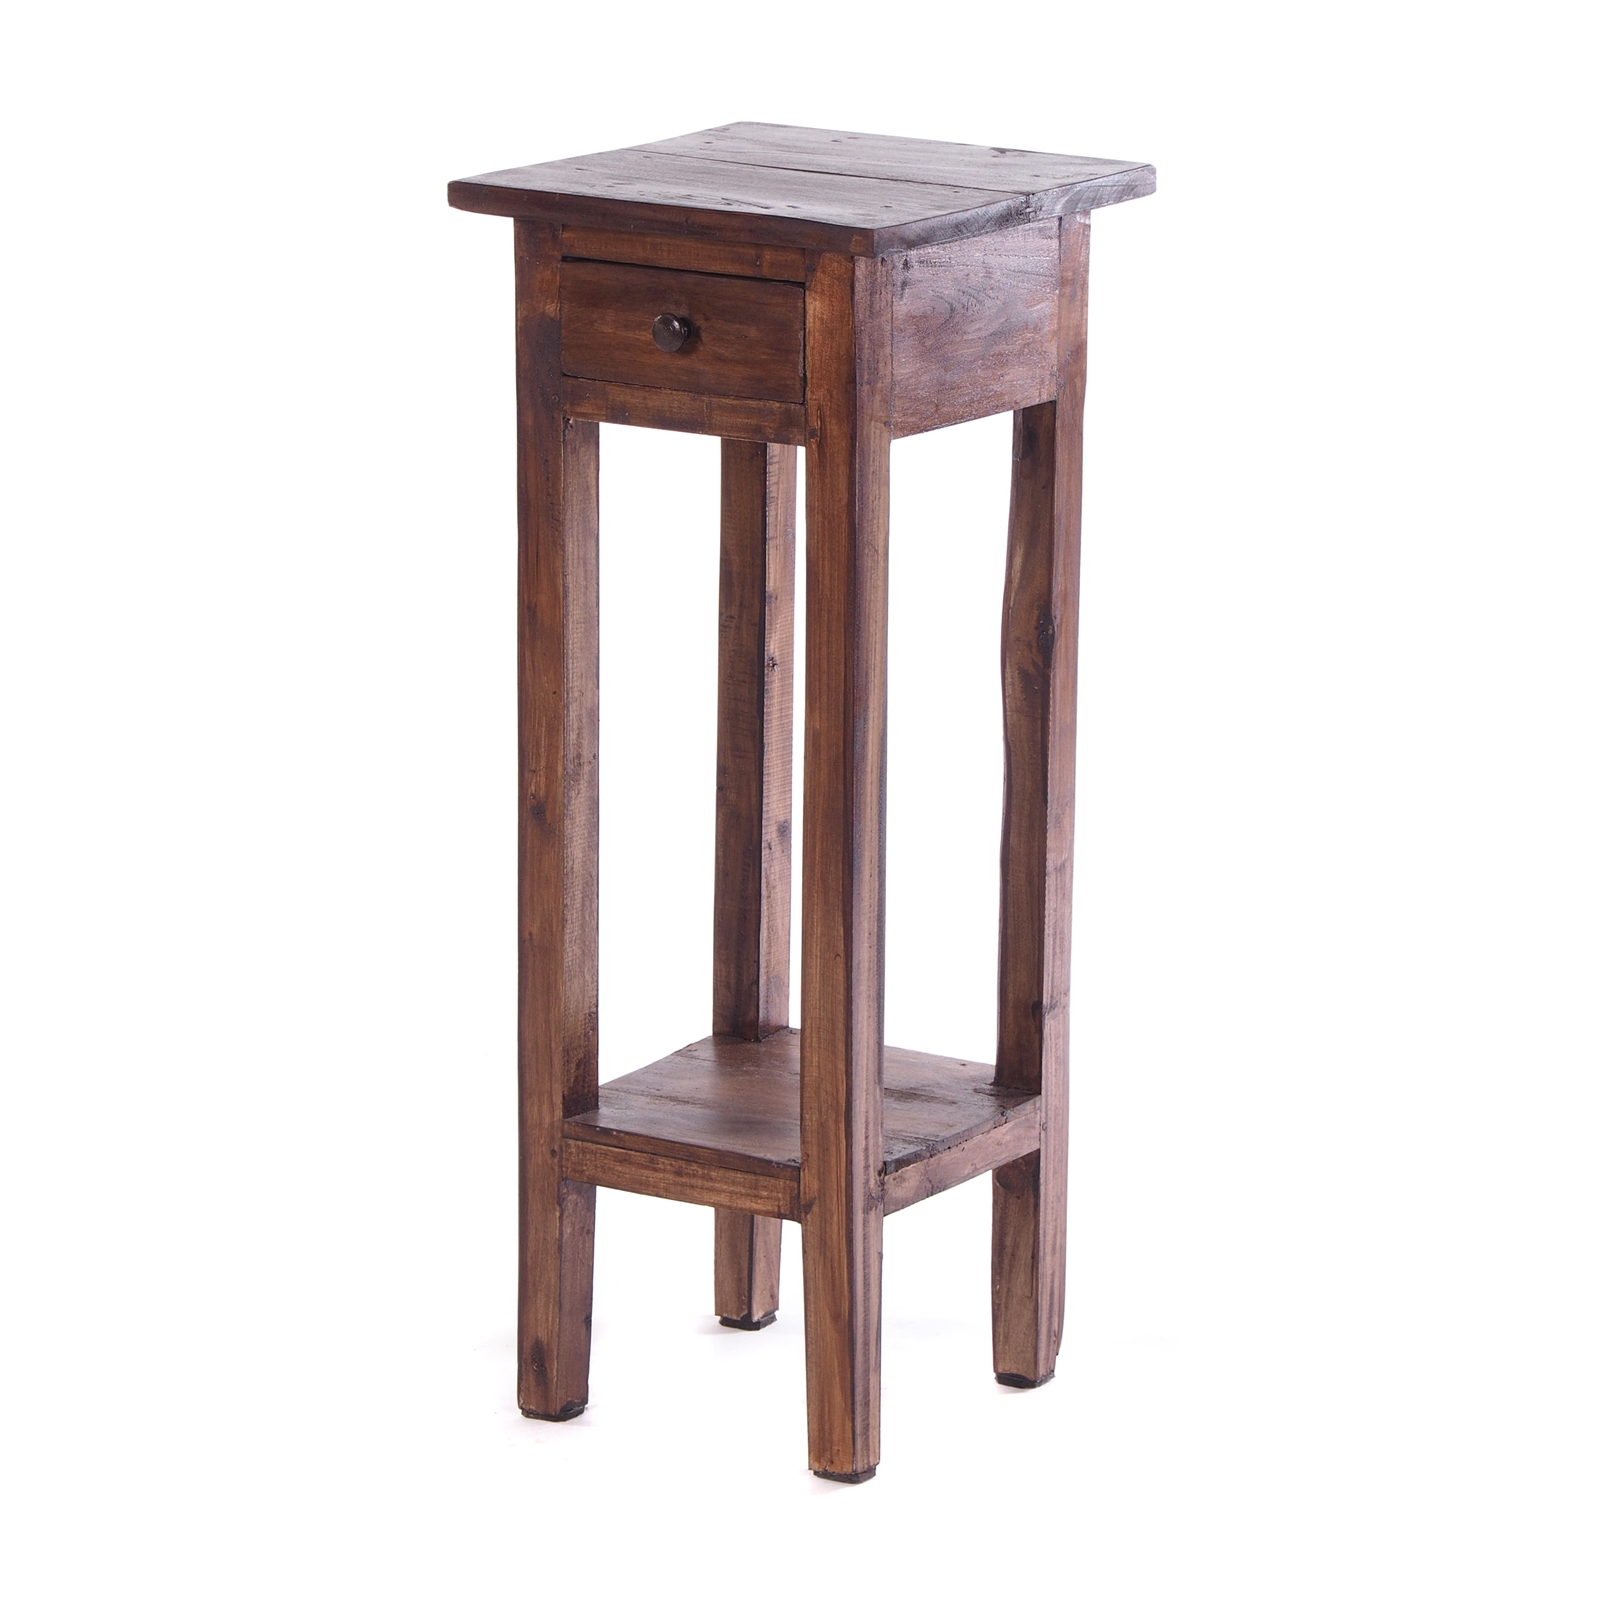 telephone-table-napoleon-75x30x30cm-hxwxd-vintage-wood-hallway